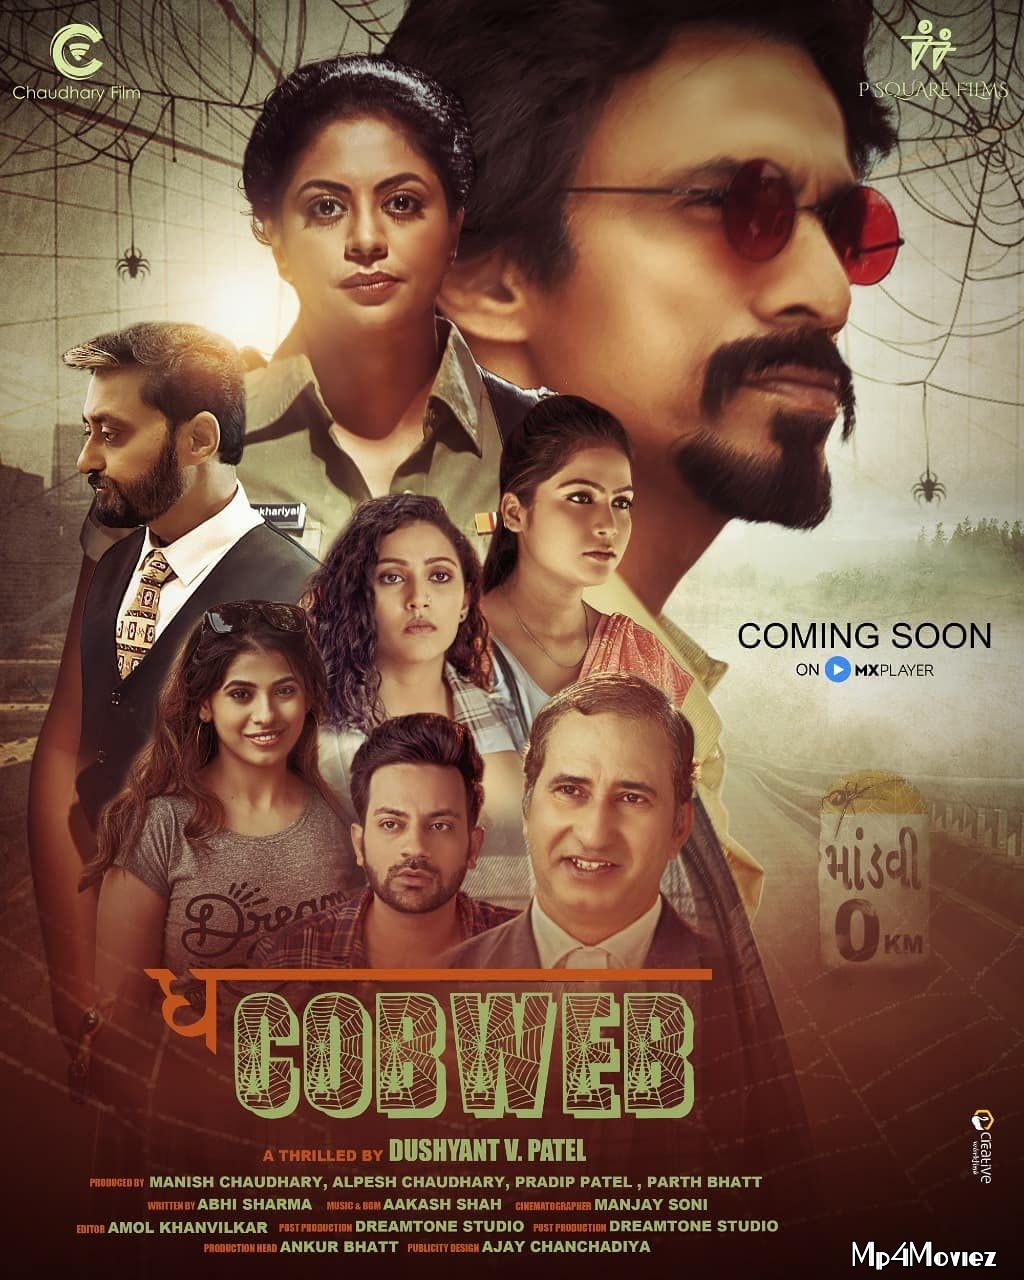 The Cobweb (2021) S01 Hindi MX Complete Web Series download full movie